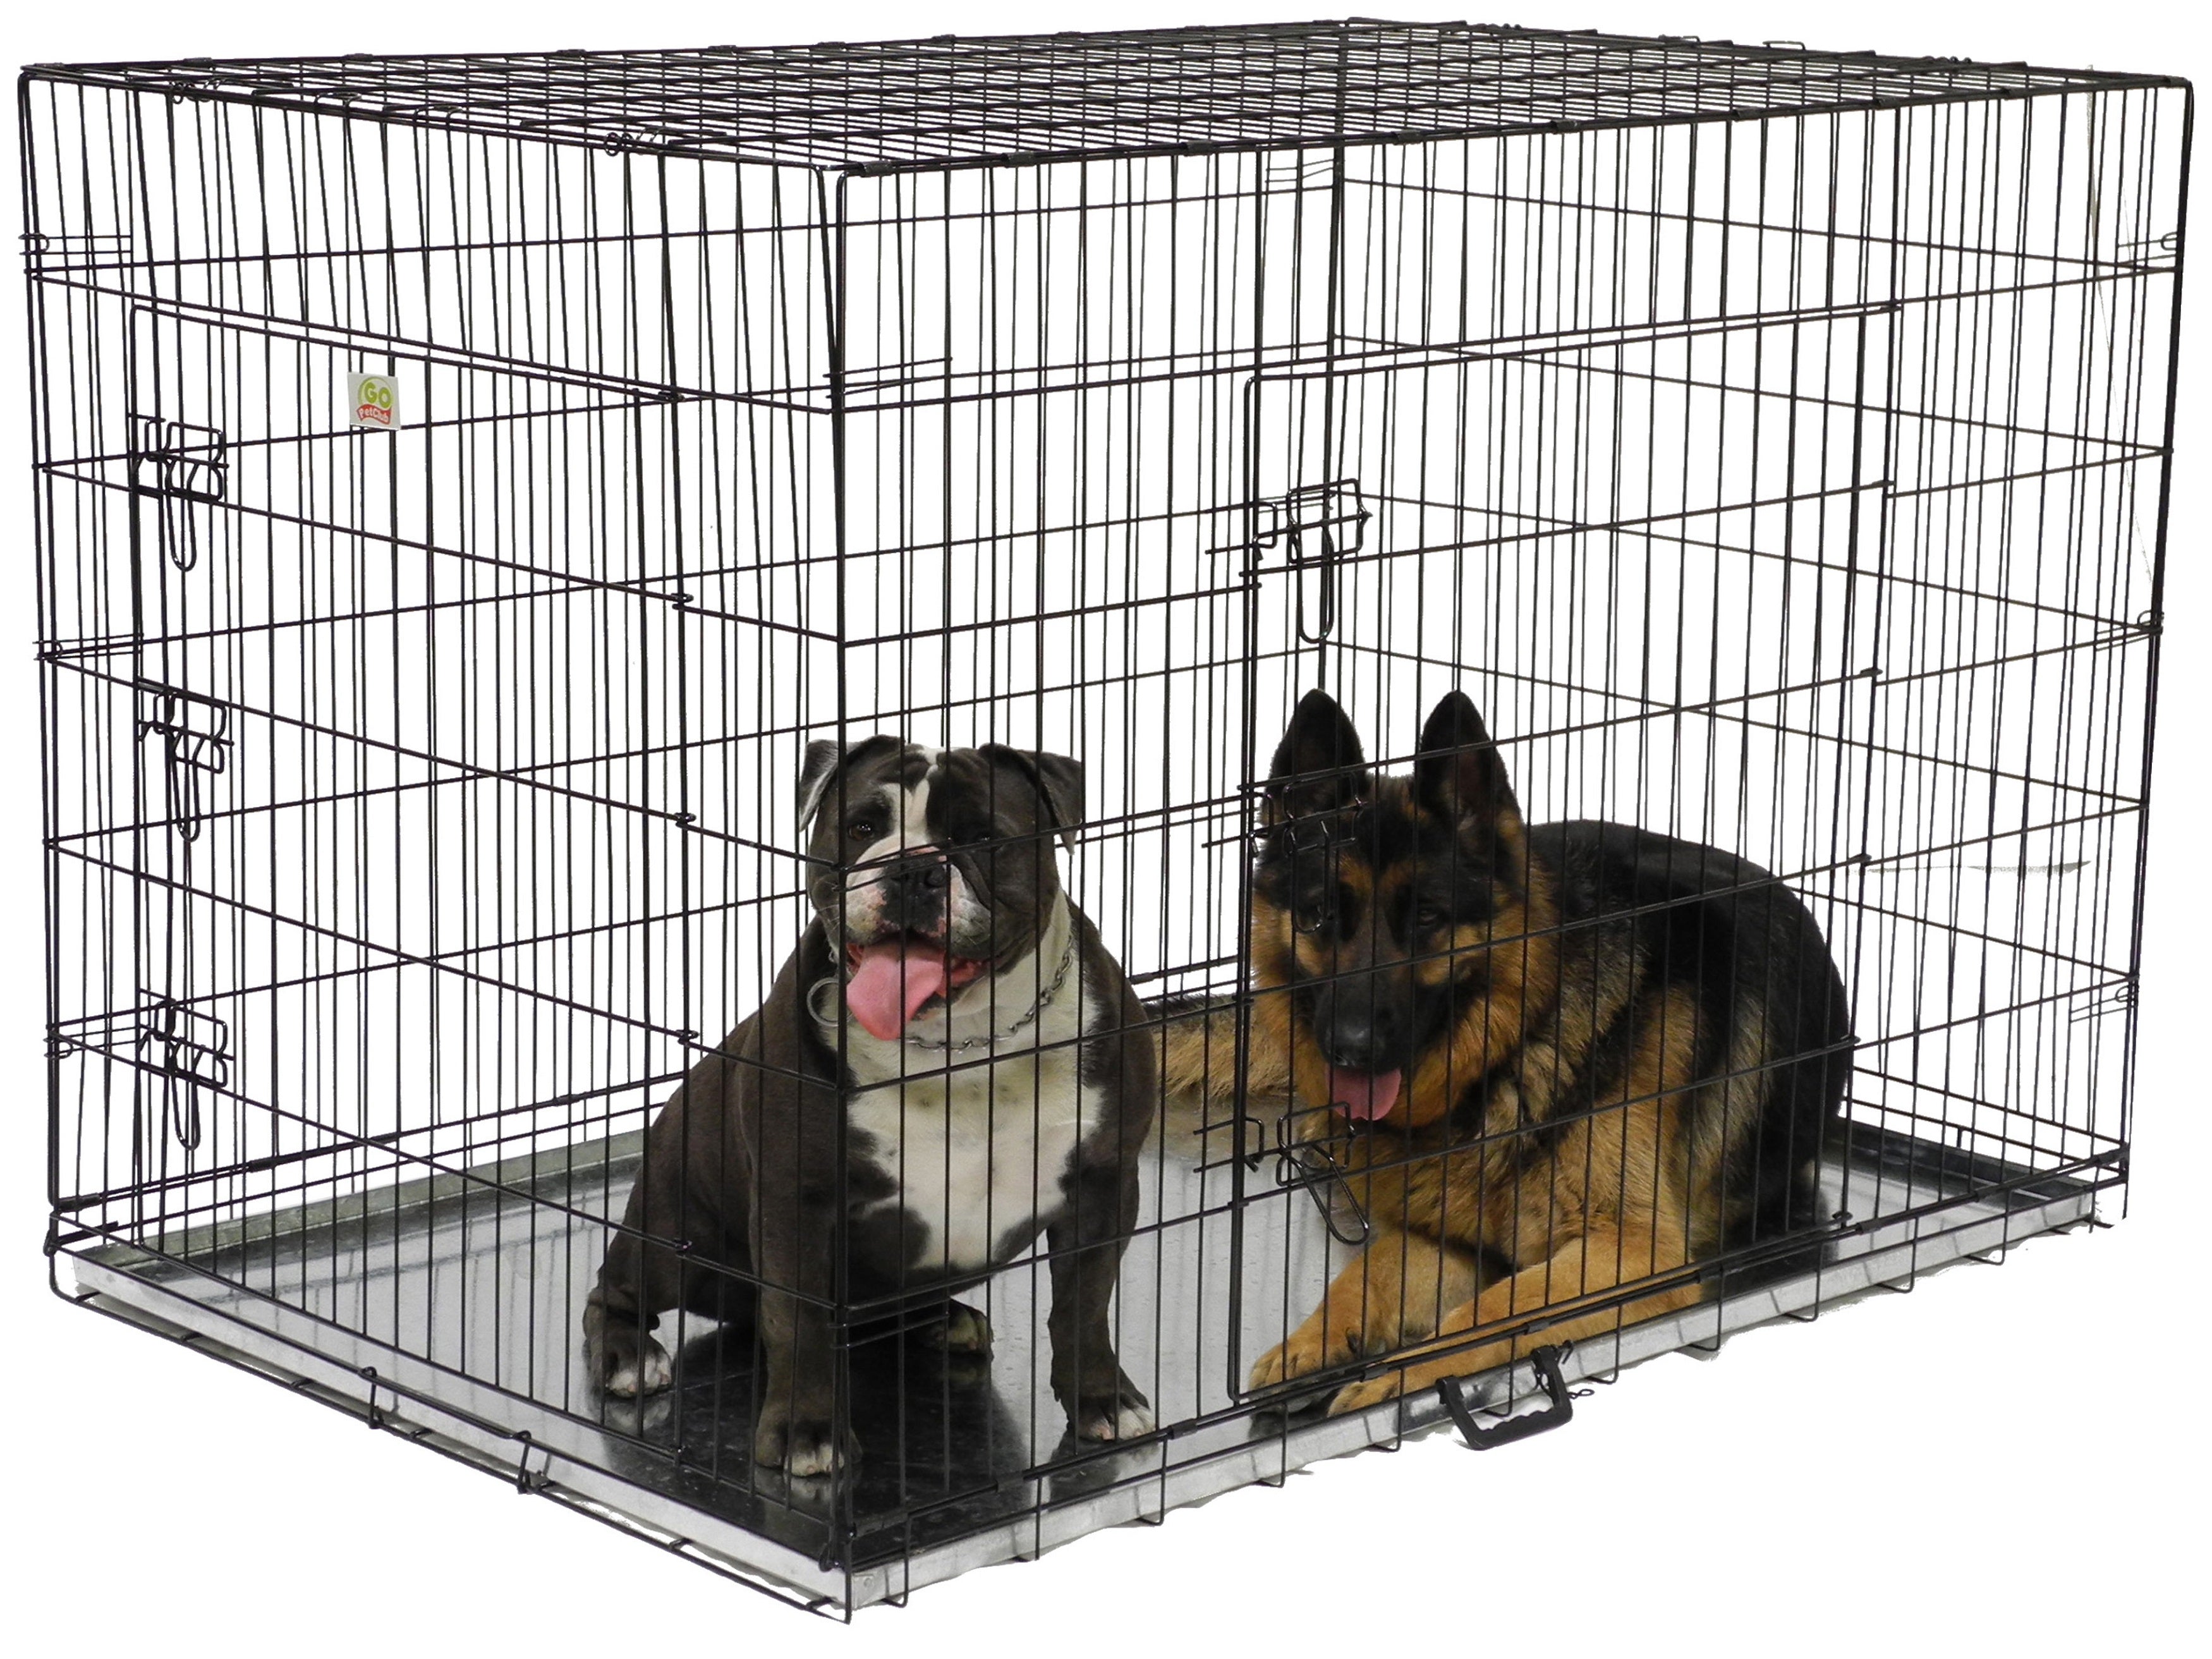 metal dog crate